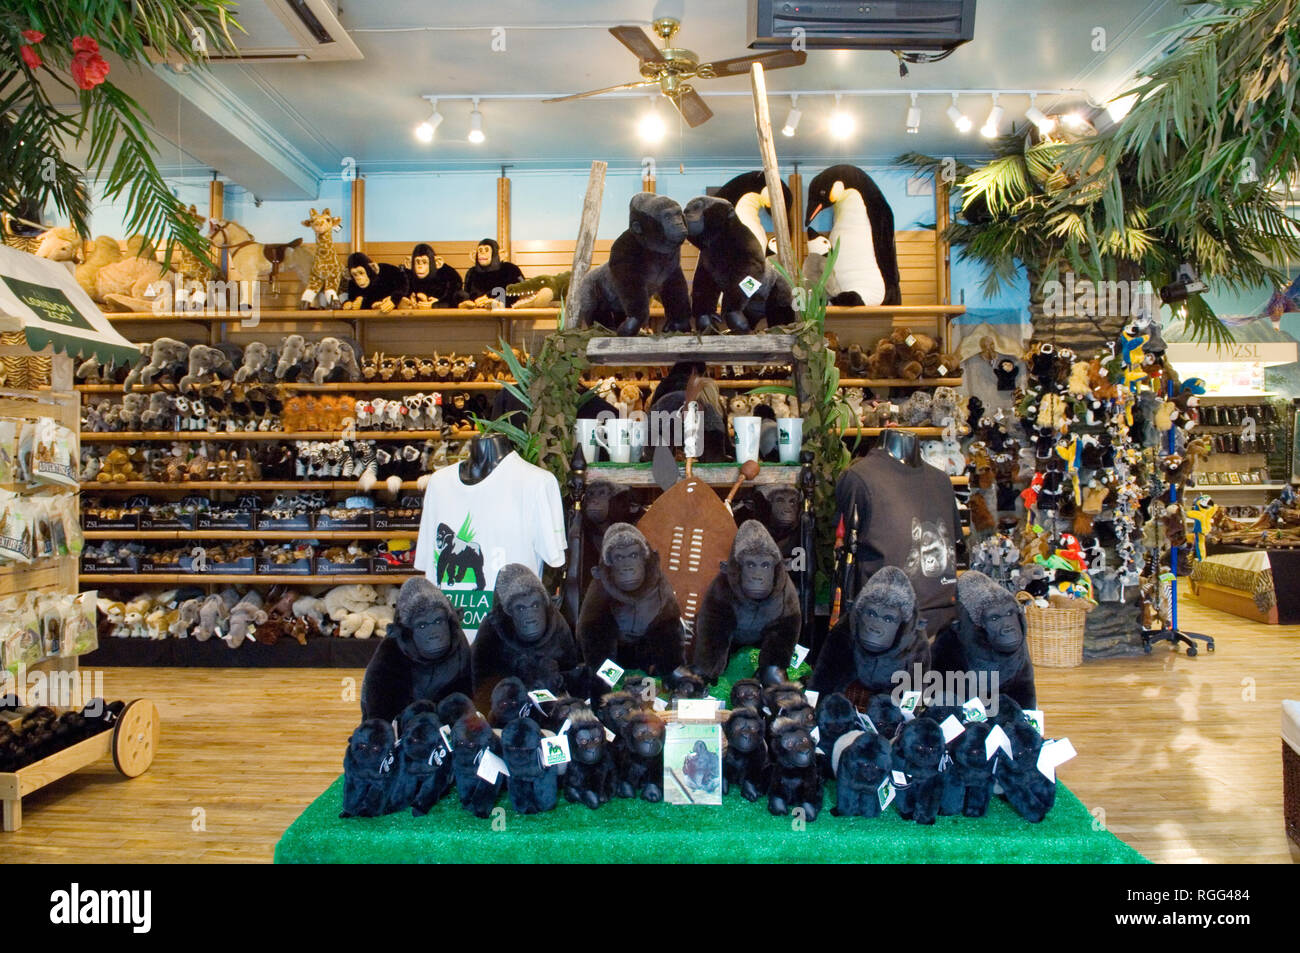 London Zoo gift shop Stock Photo